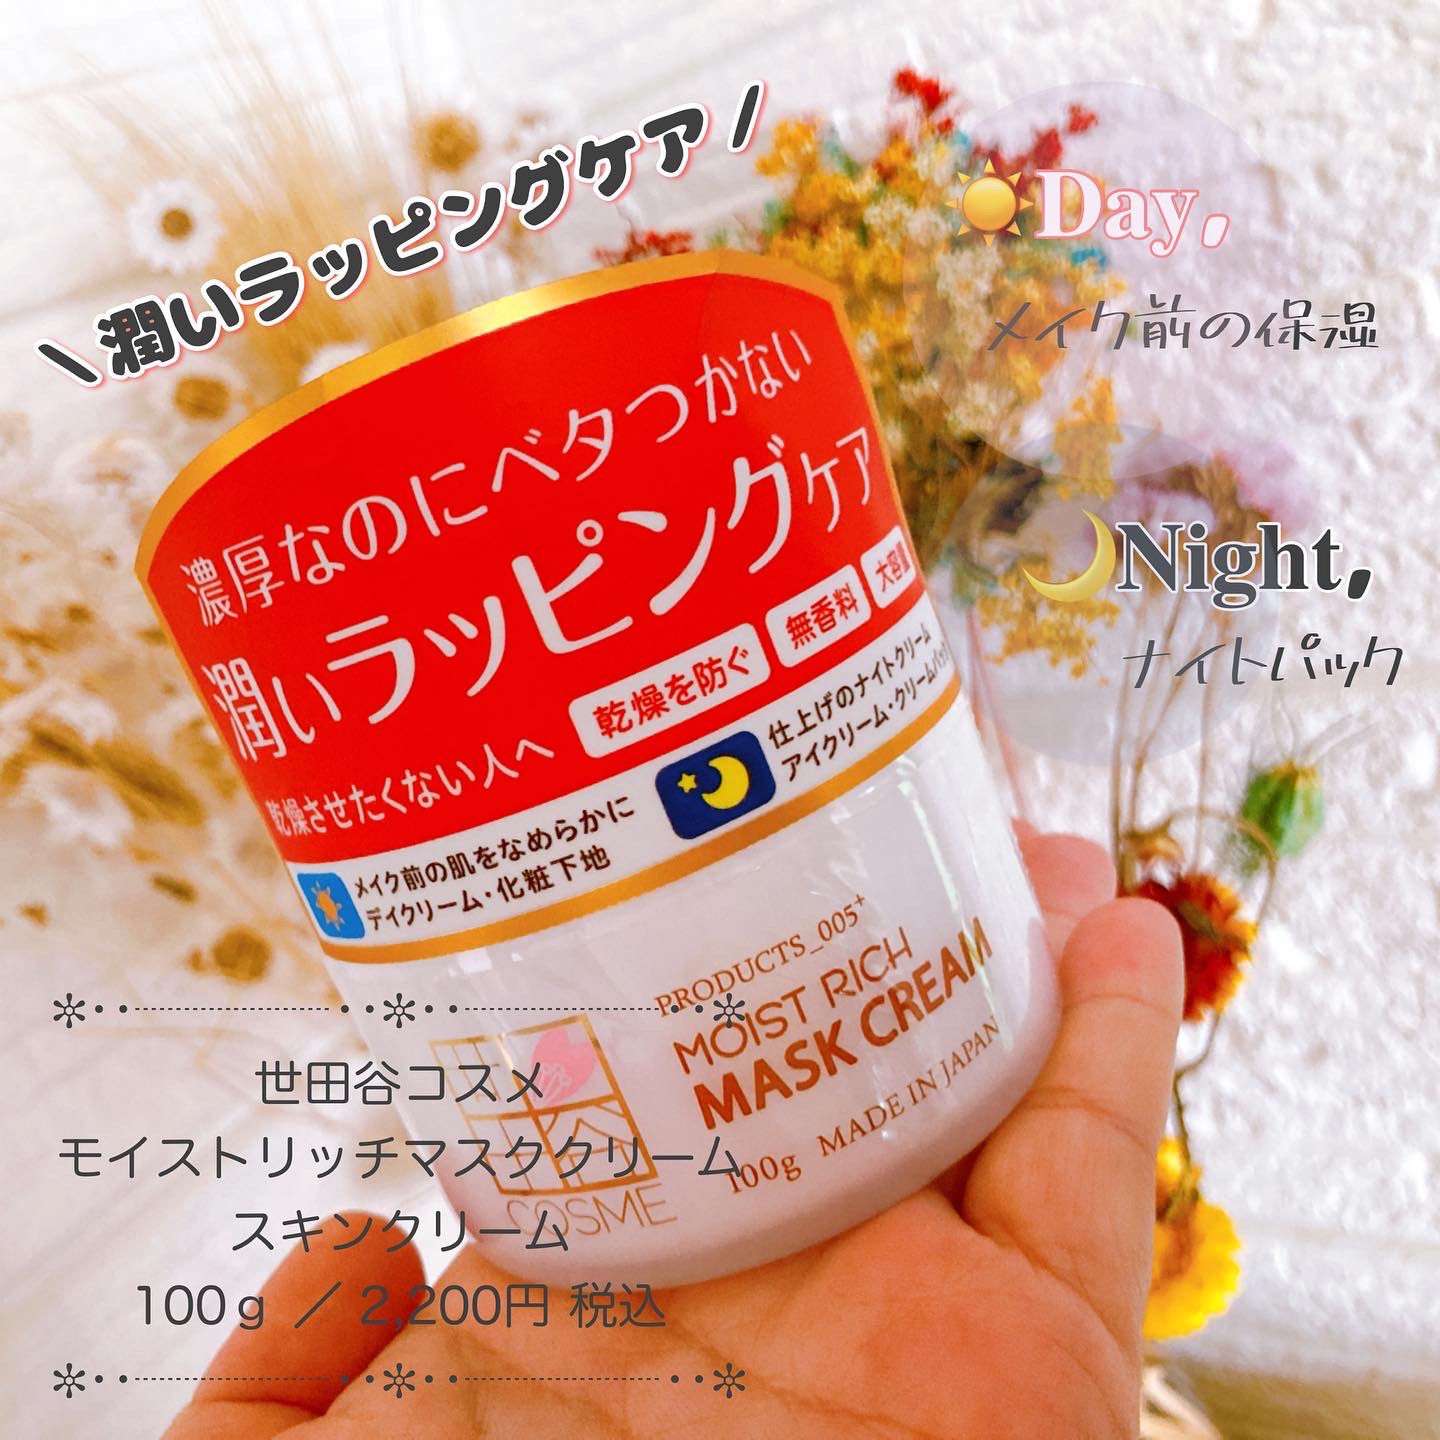 Setagaya COSME モイストリッチマスククリームの良い点・メリットに関するメグさんの口コミ画像1